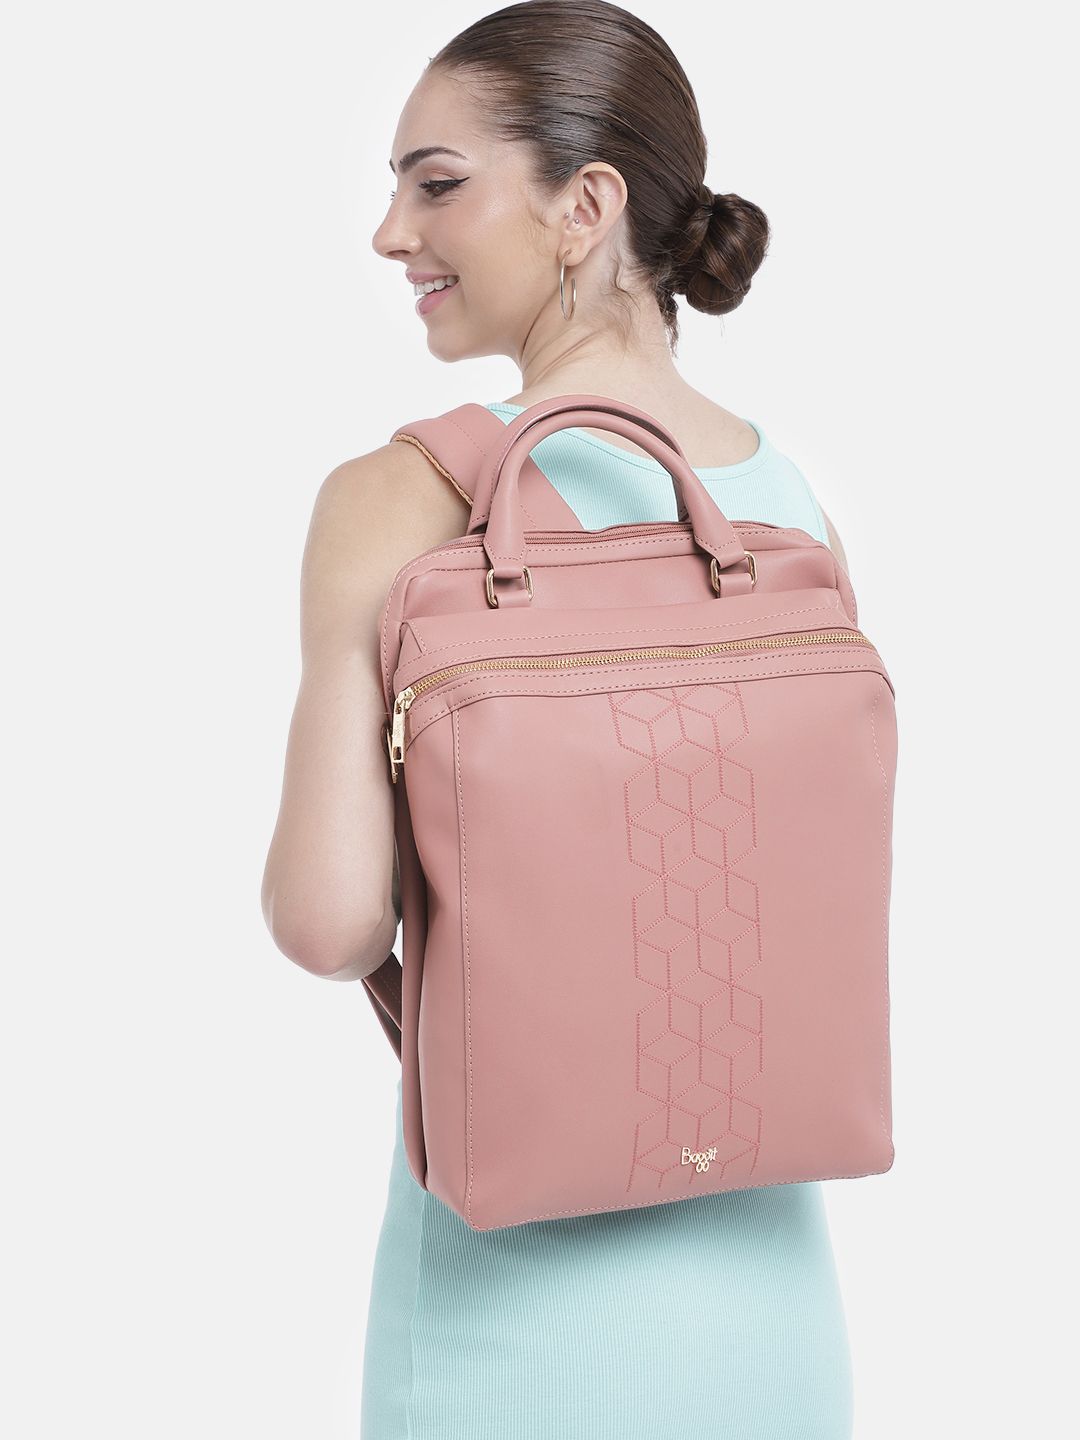 Details more than 159 baggit laptop bags for women - 3tdesign.edu.vn